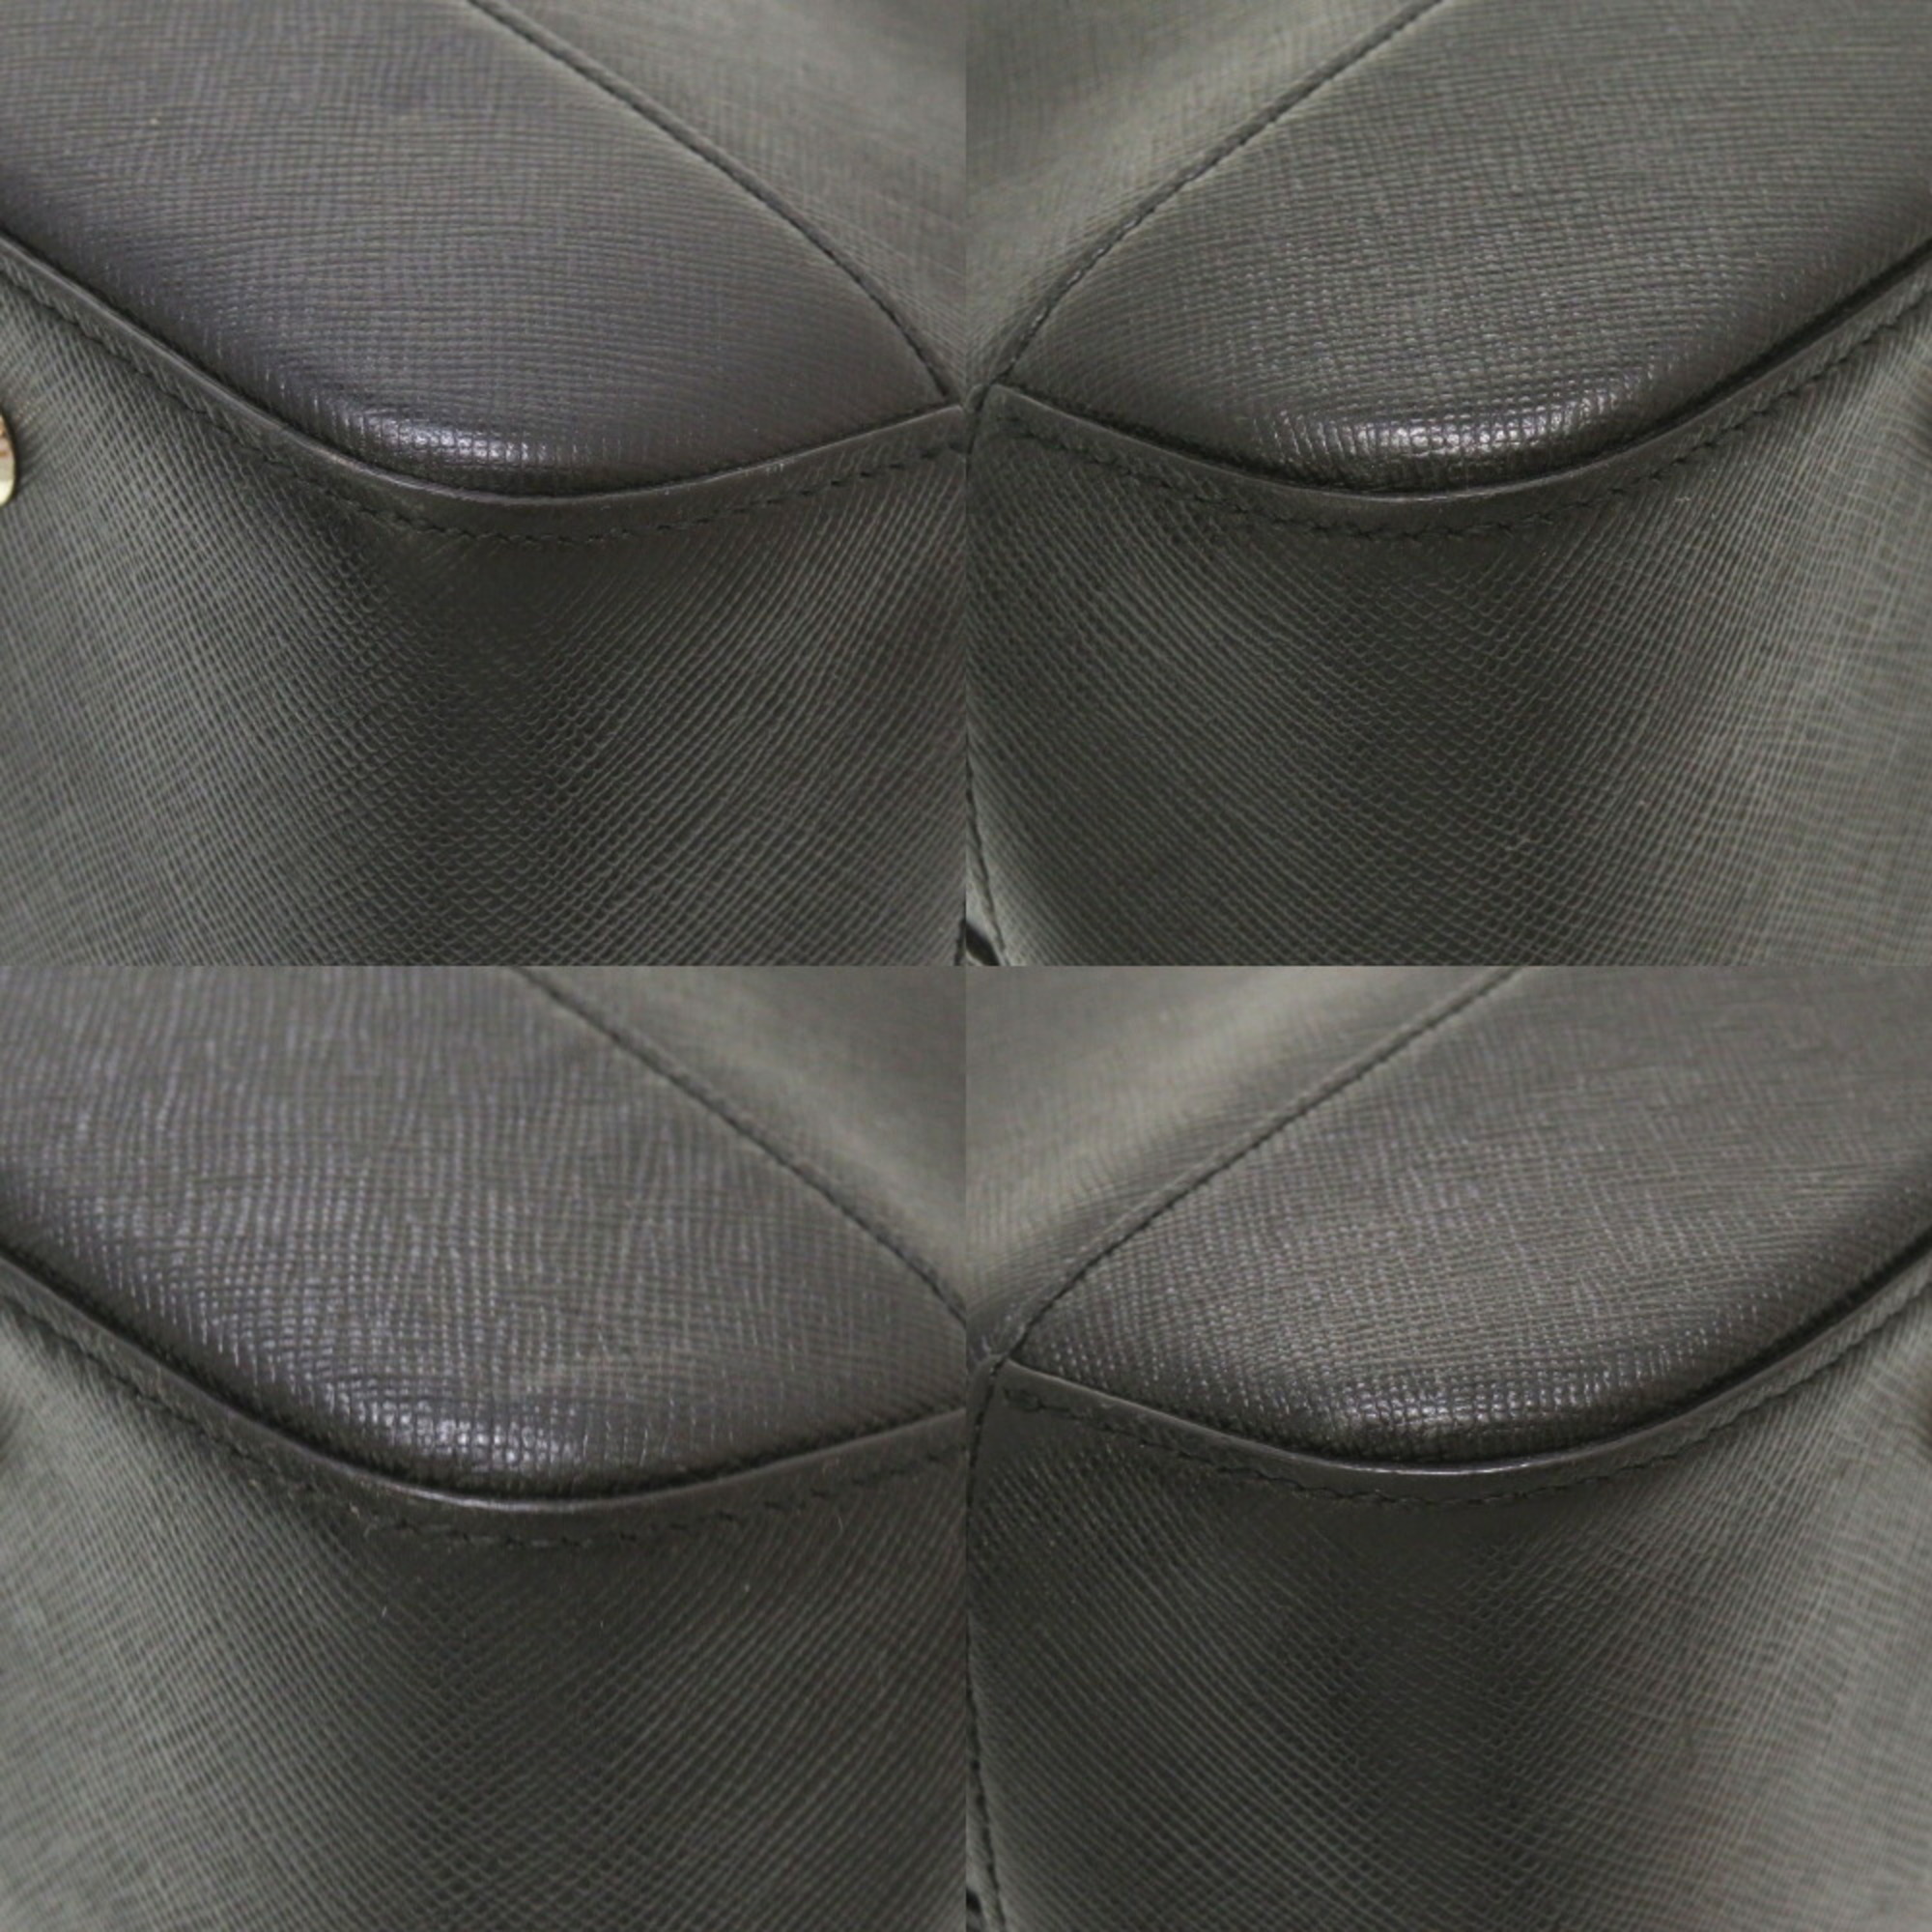 Burberry Check Leather Black Handbag 0158 BURBERRY